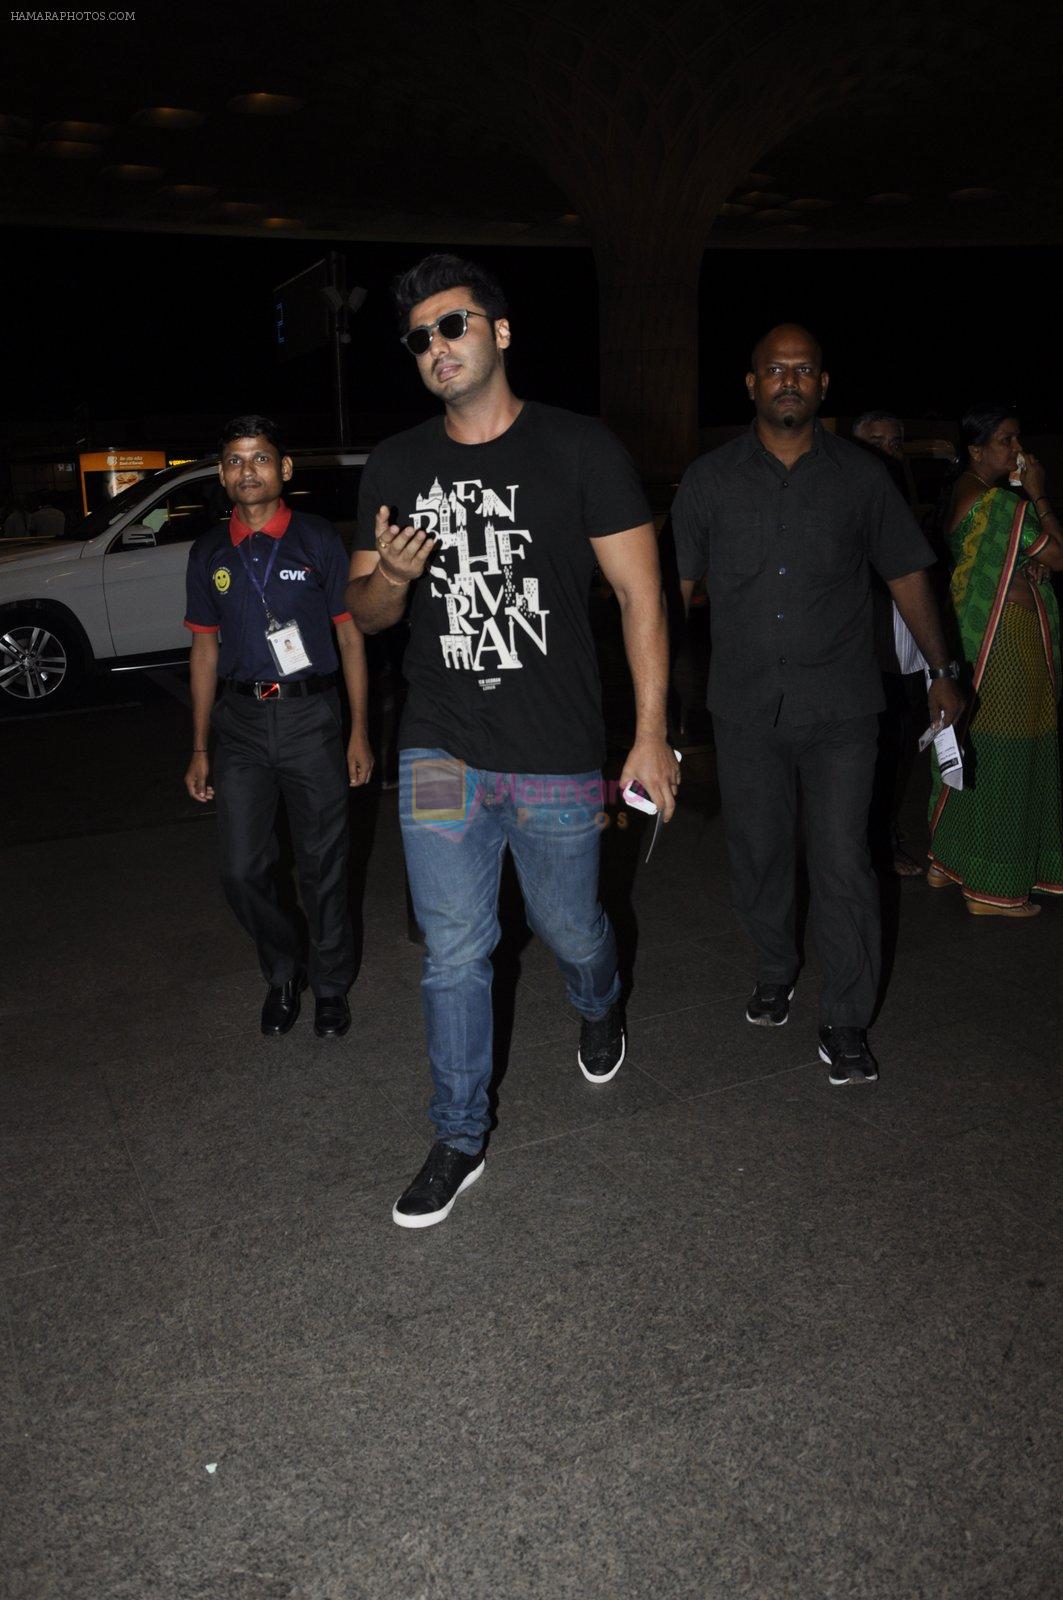 Arjun Kapoor snapped at airport in Mumbai on 5th June 2016